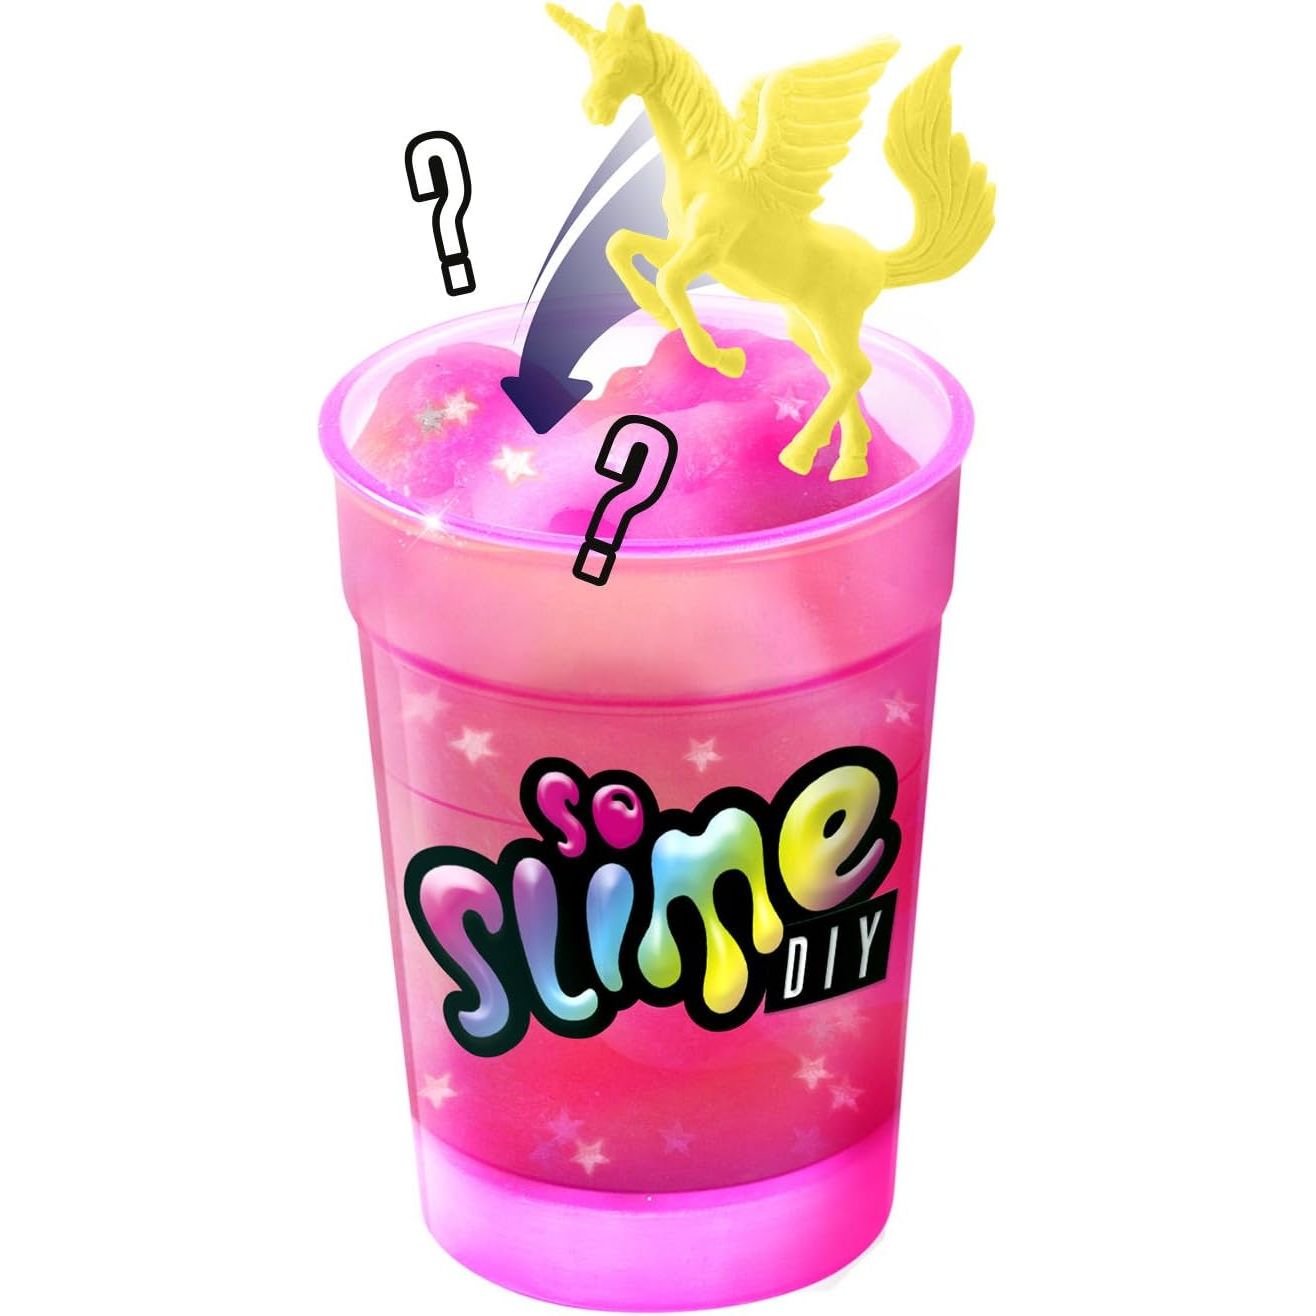 Canal So Slime Diy Original SSC001 - Pink Shaker Assorted 6+